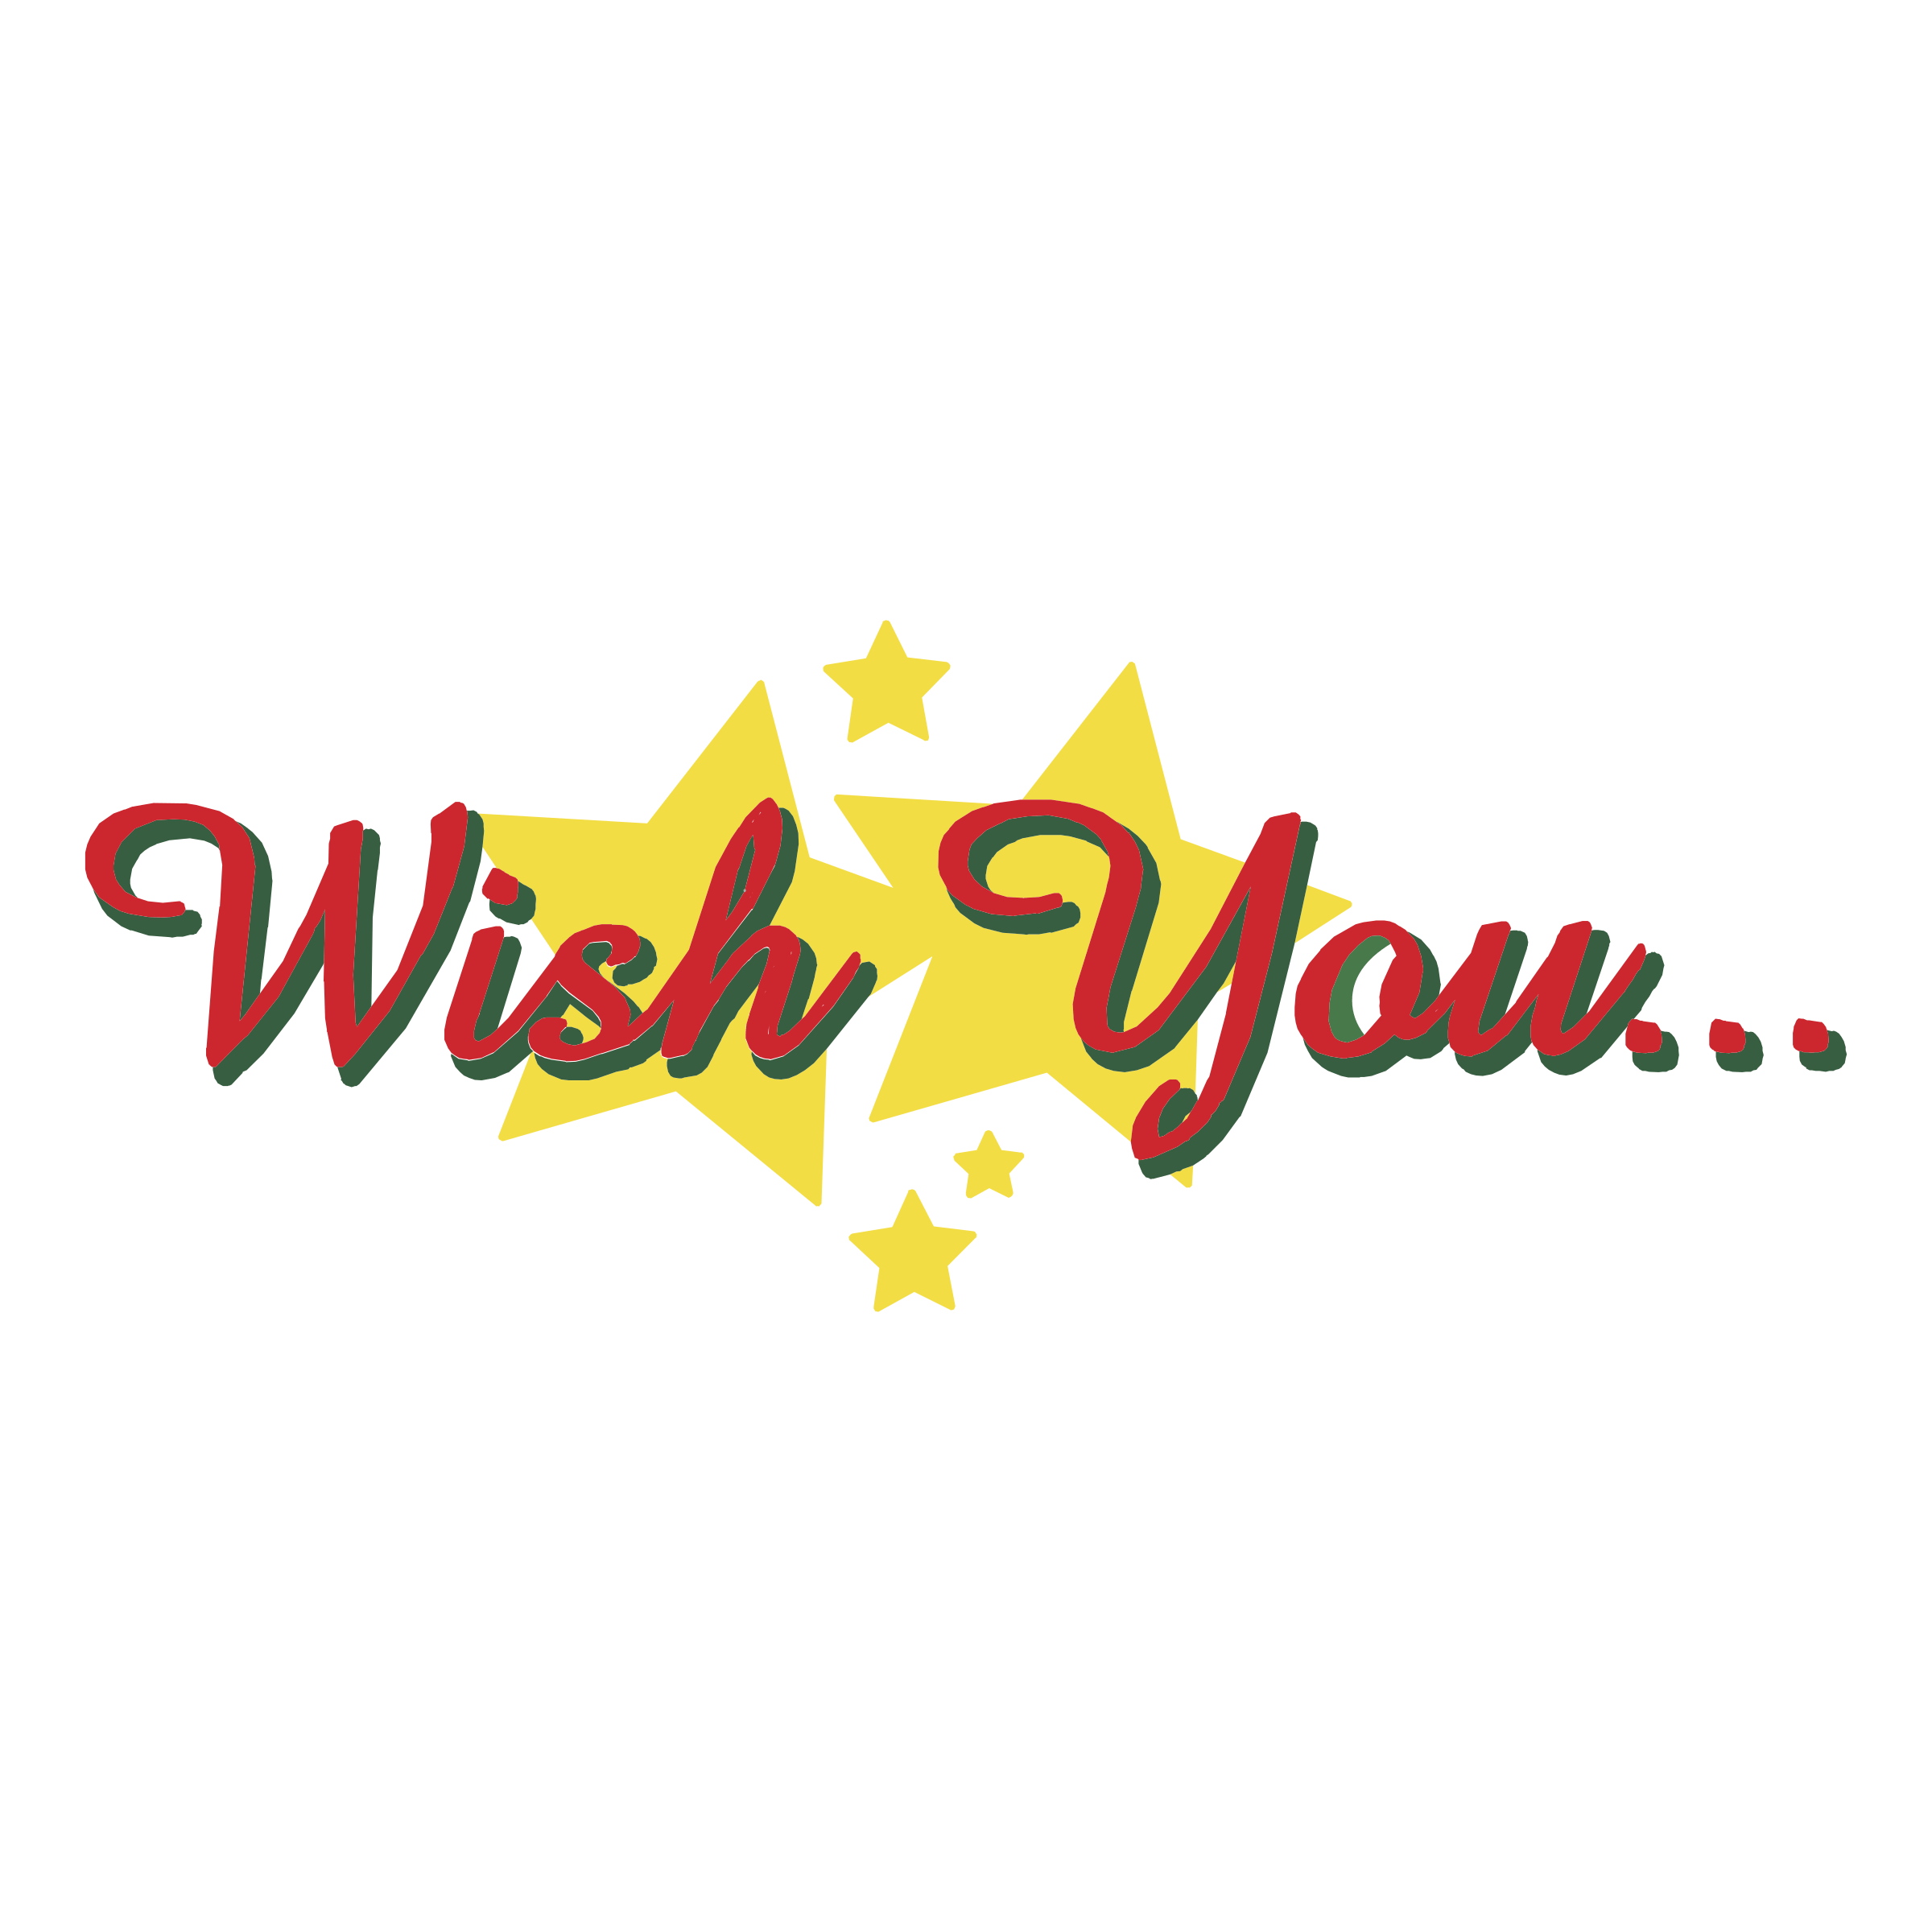 Wish Transparent Logo - Wish You Logo PNG Transparent & SVG Vector - Freebie Supply